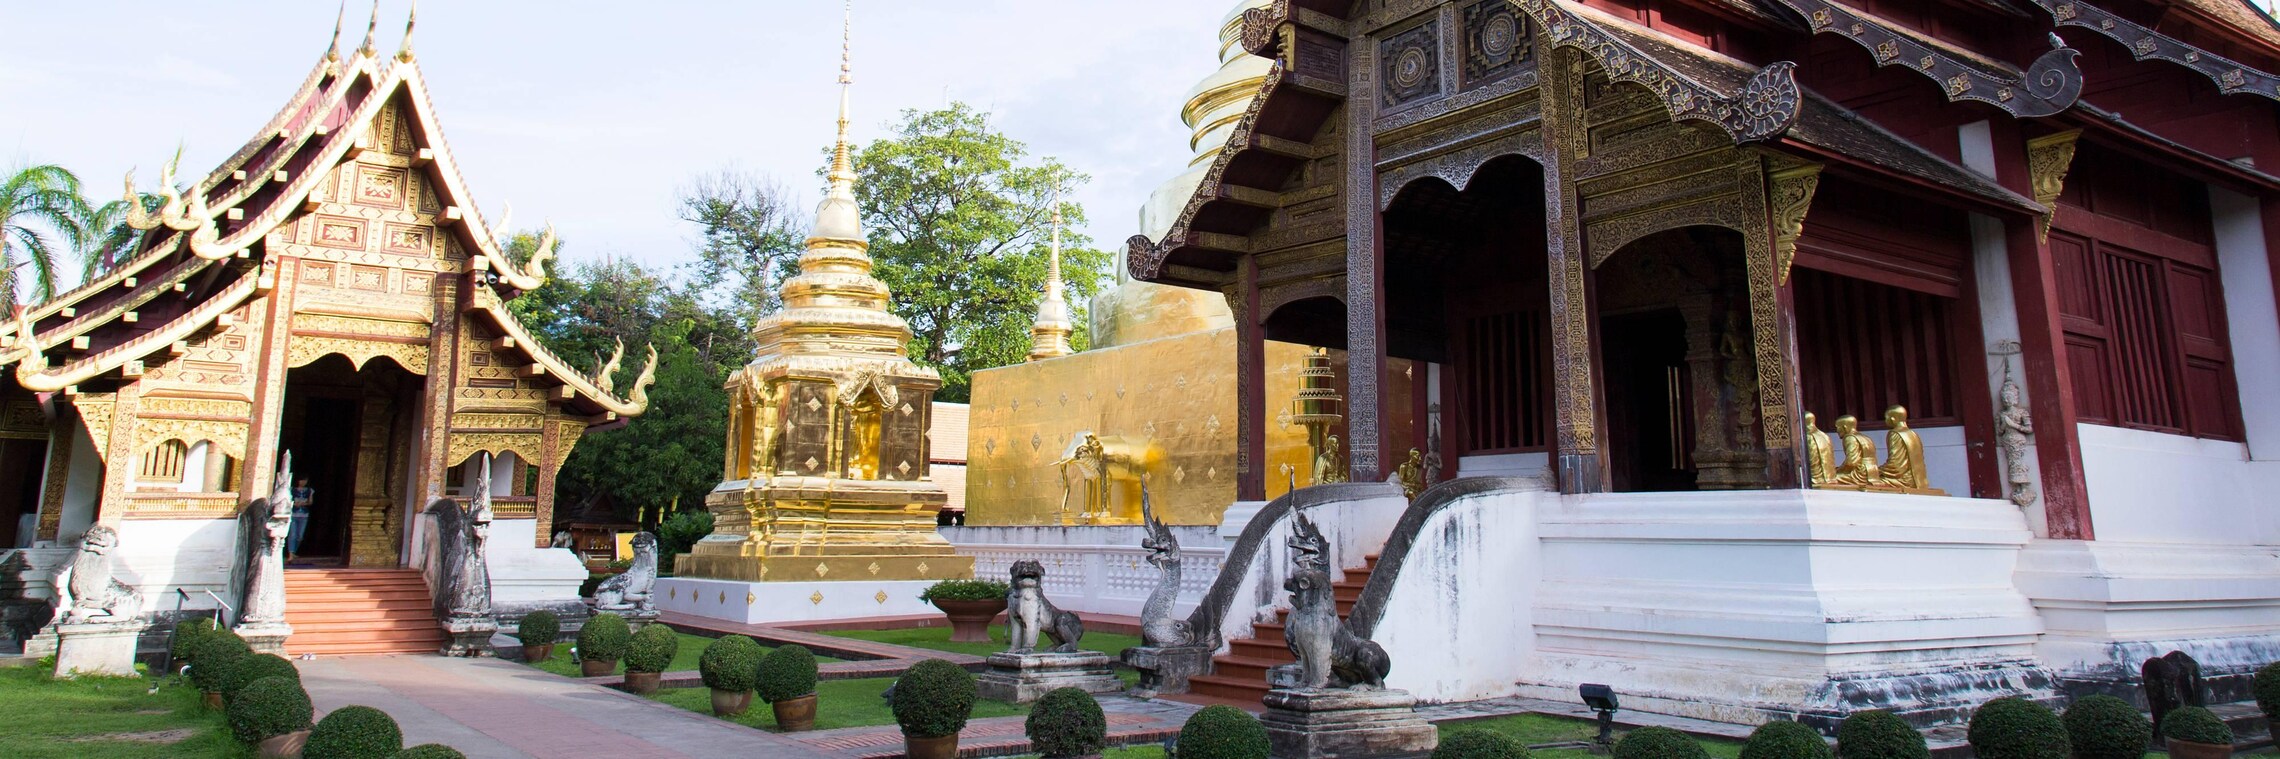 Phra Singh temple